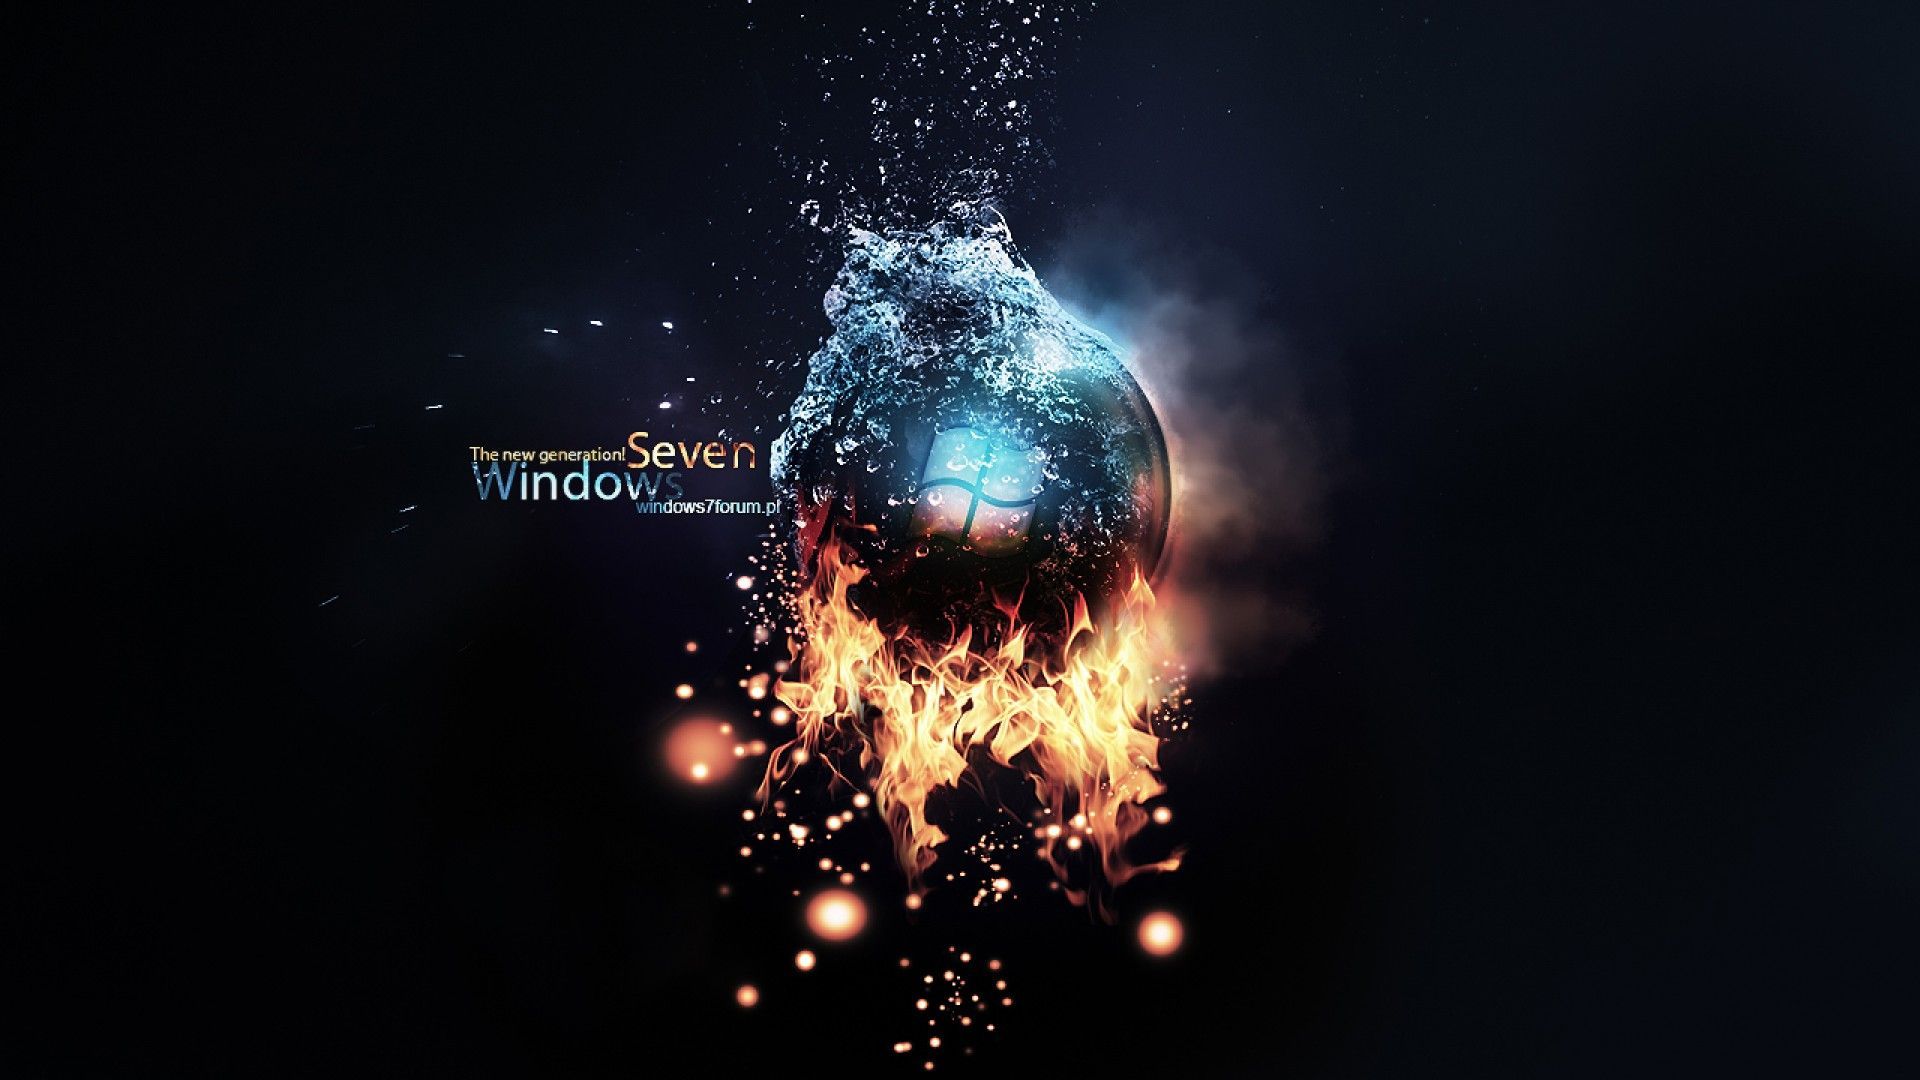 Windows 8 Cool Image 1080p #17437 Wallpaper | High Resolution ...